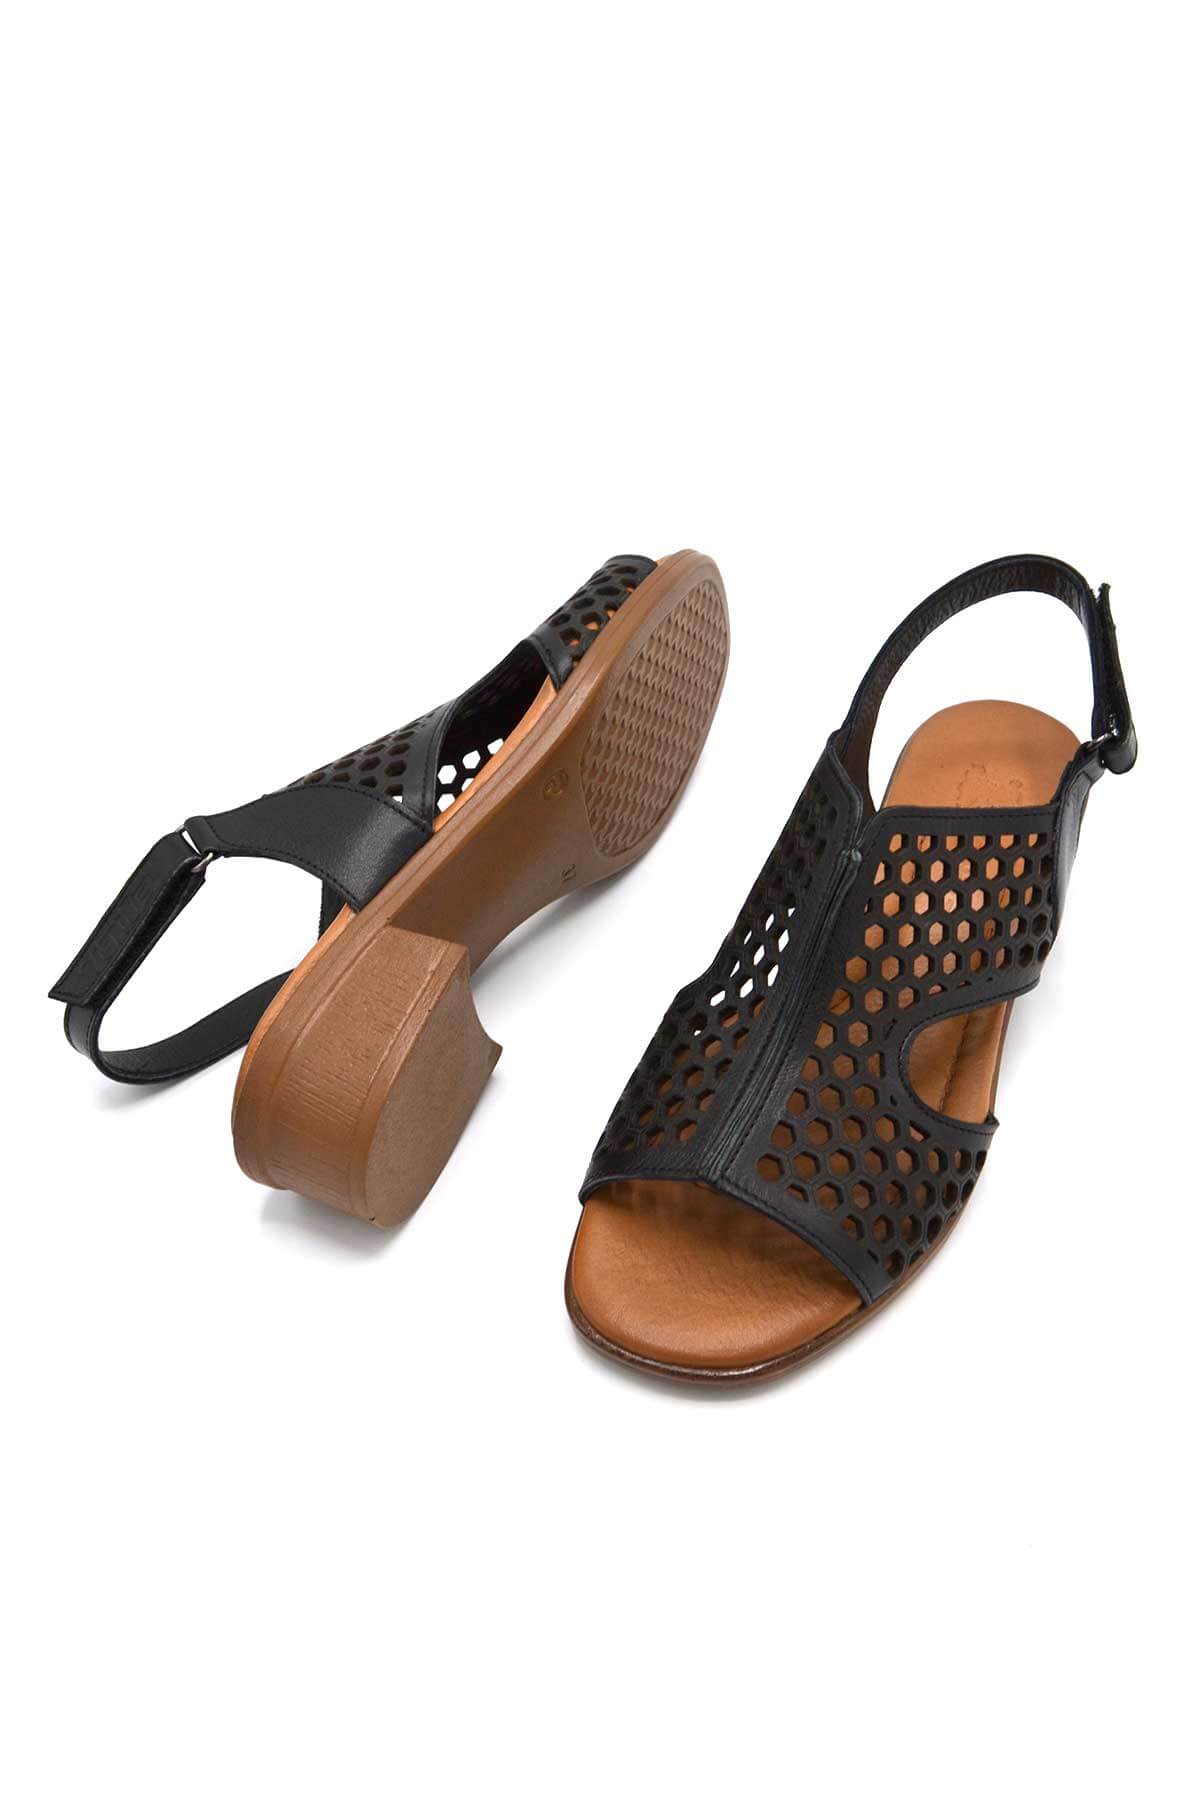 Kadın Deri Sandalet Siyah 22986007 - Thumbnail